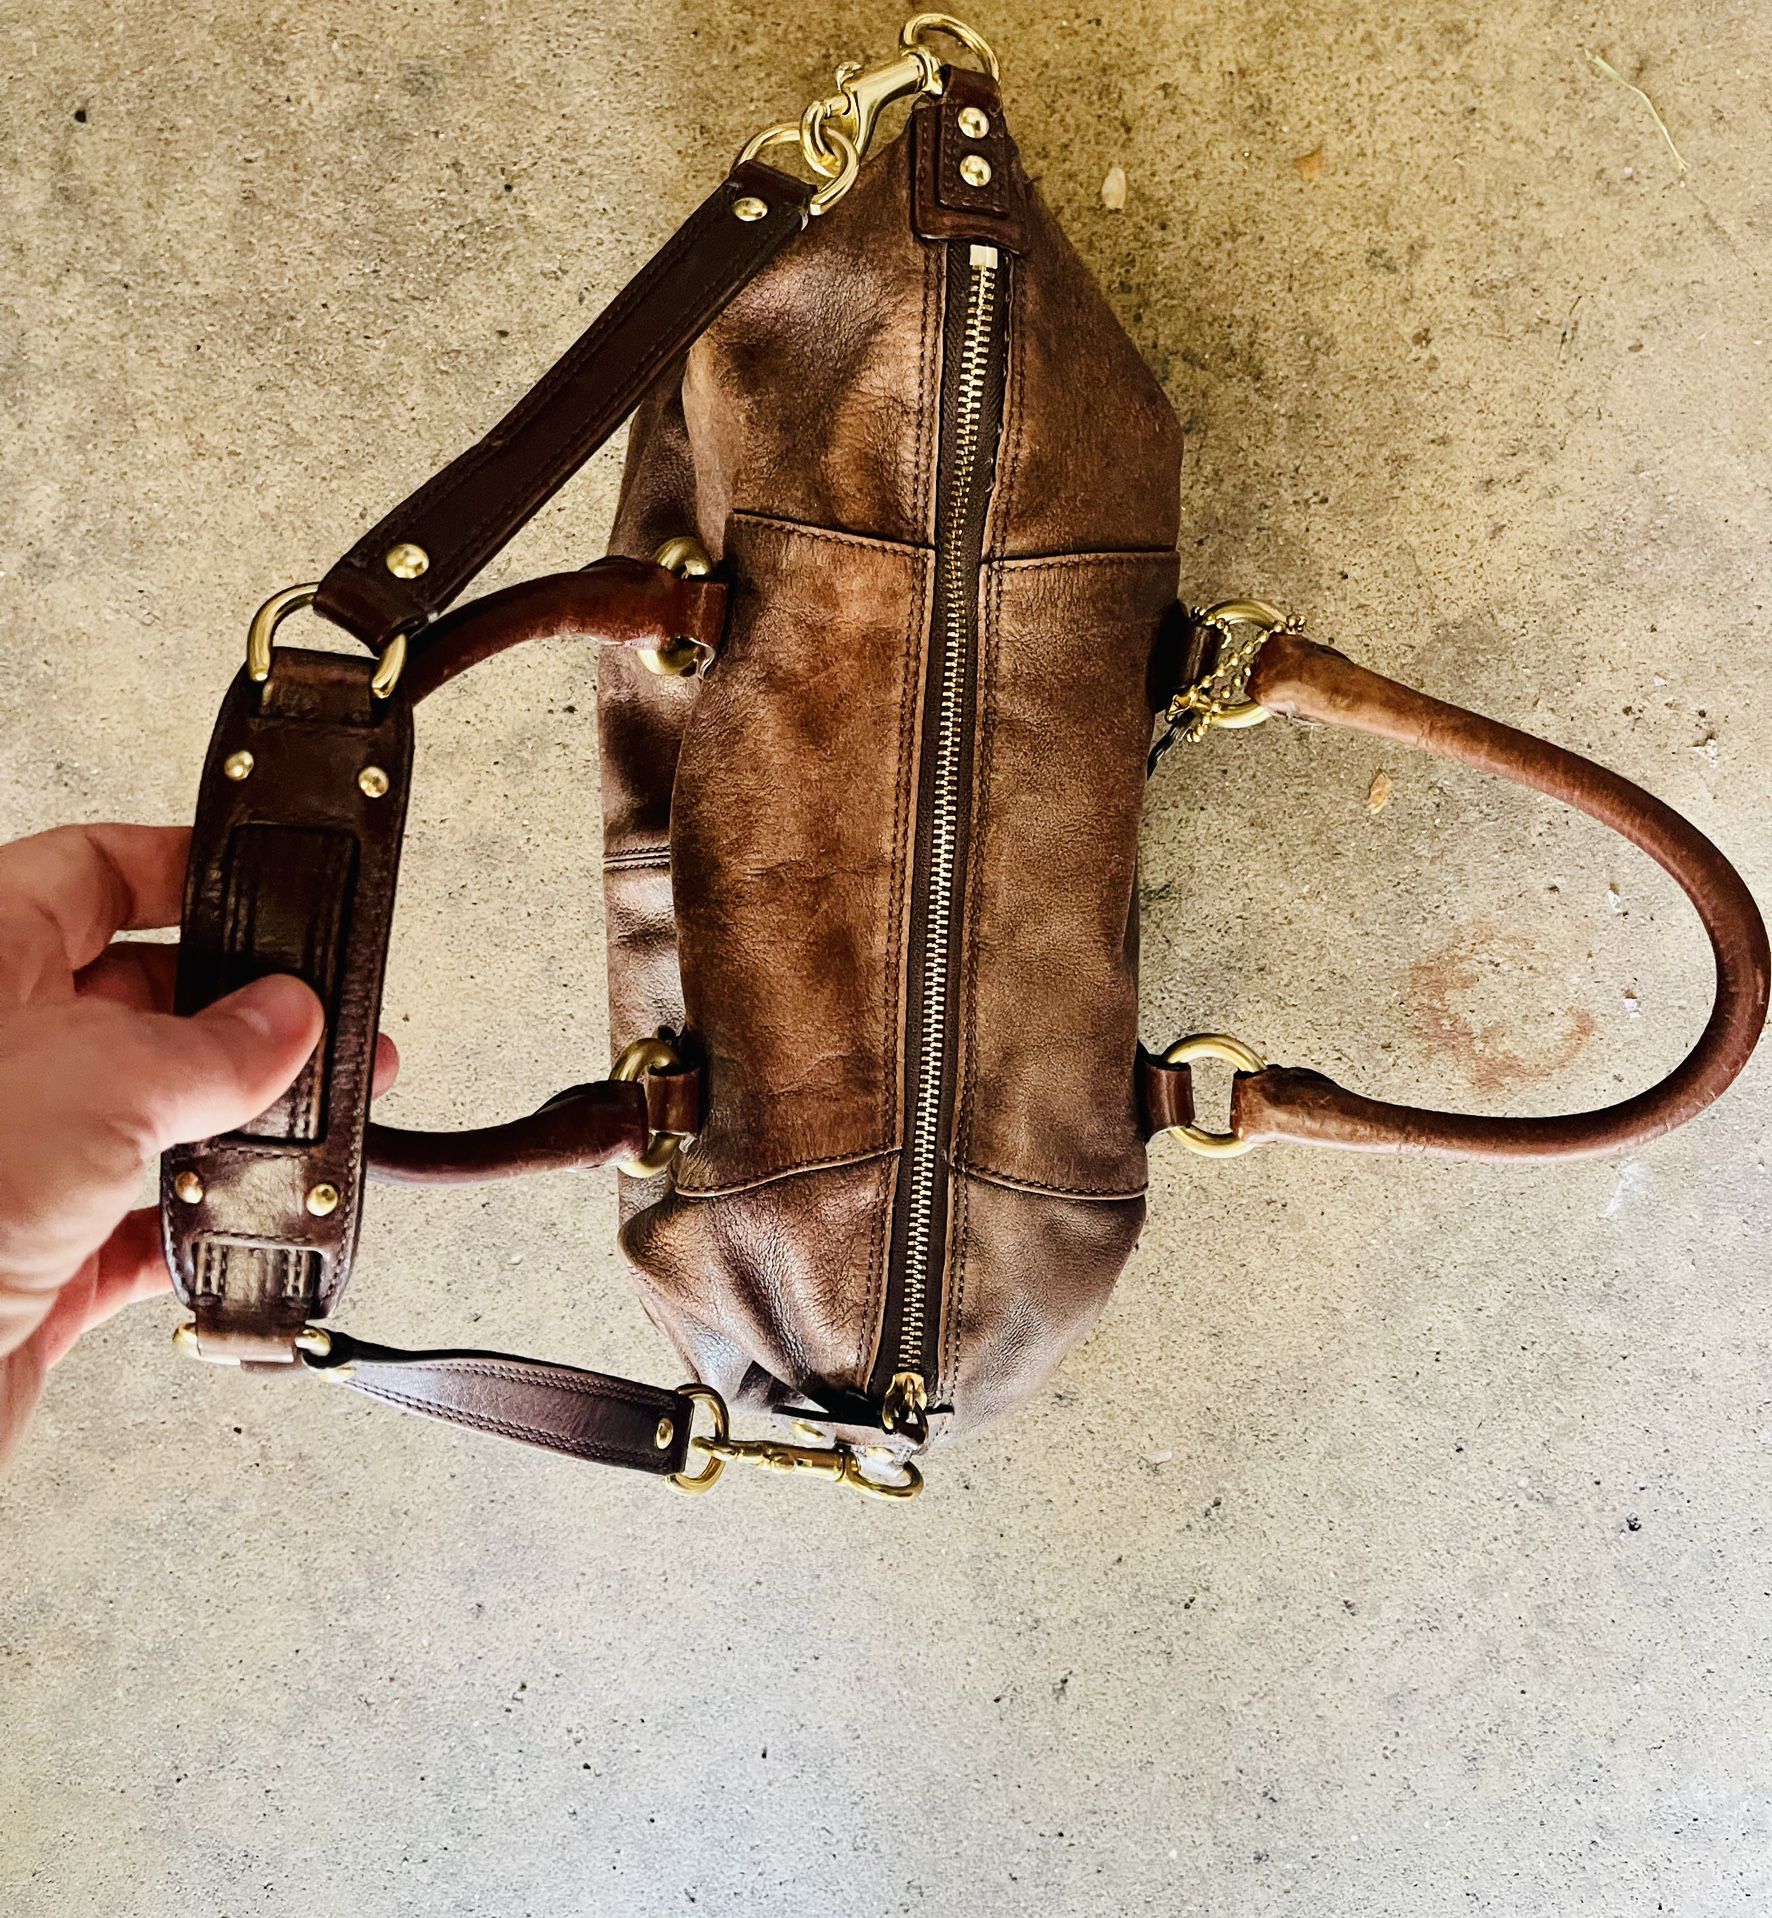 Soft Leather Brown Coach Purse/bag